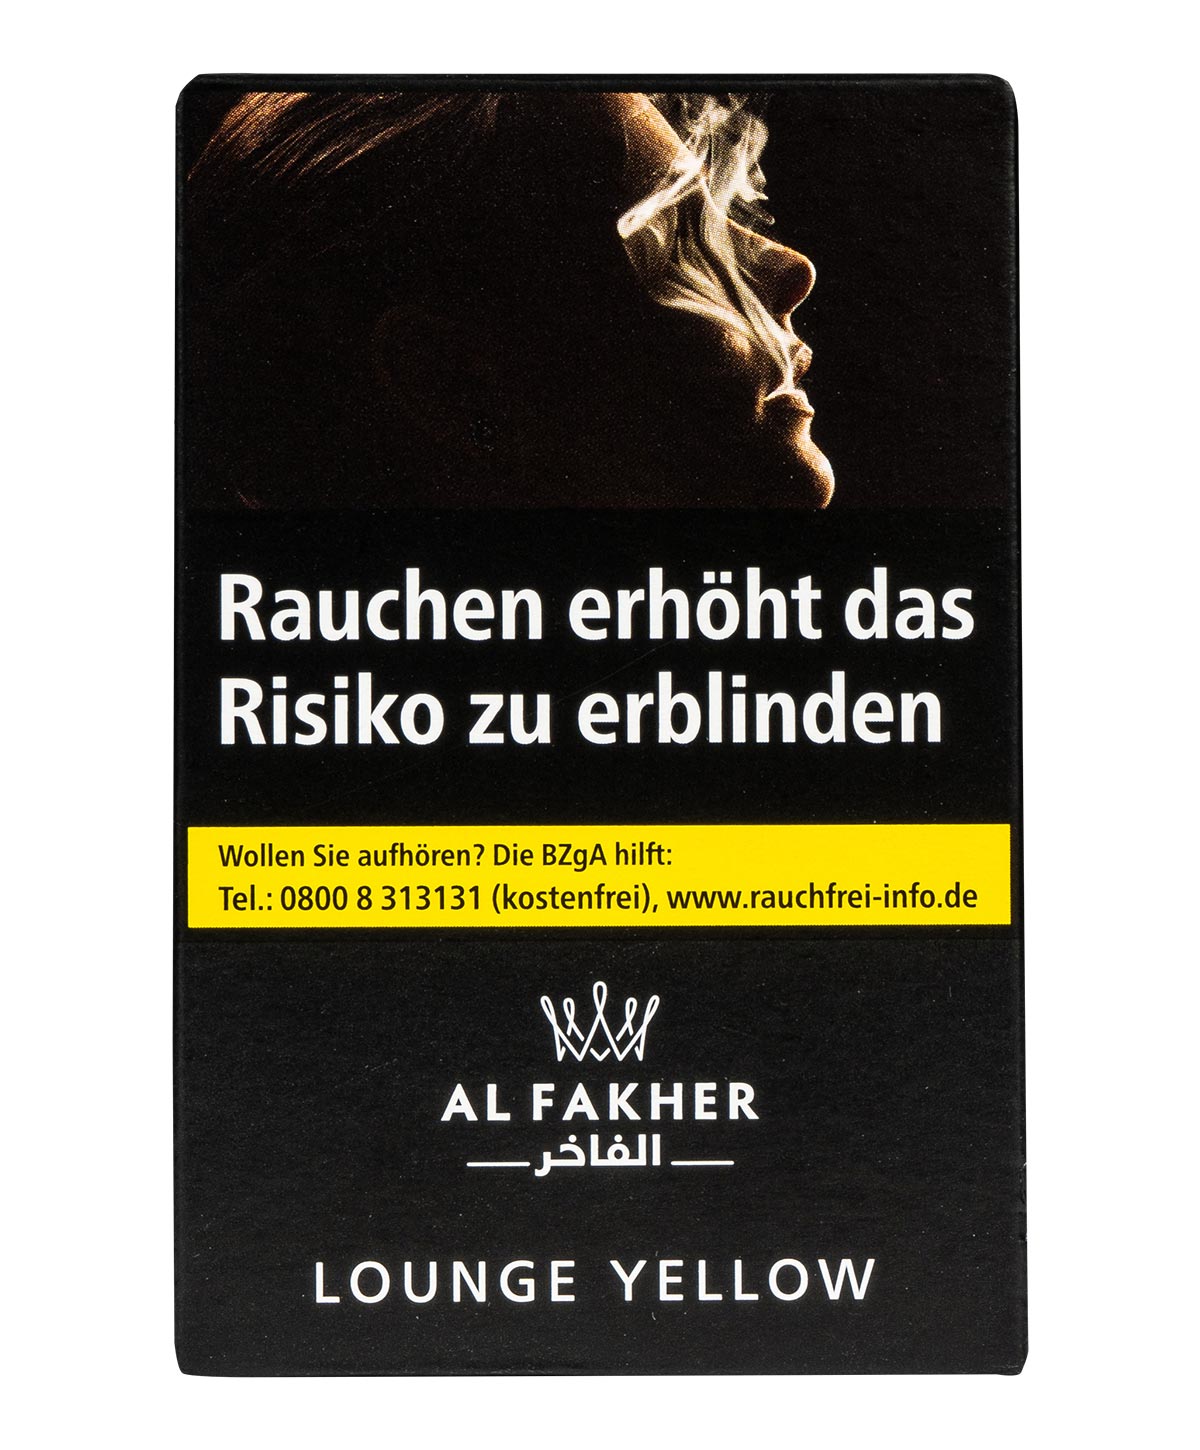 AL FAKHER Lounge Yellow 20g